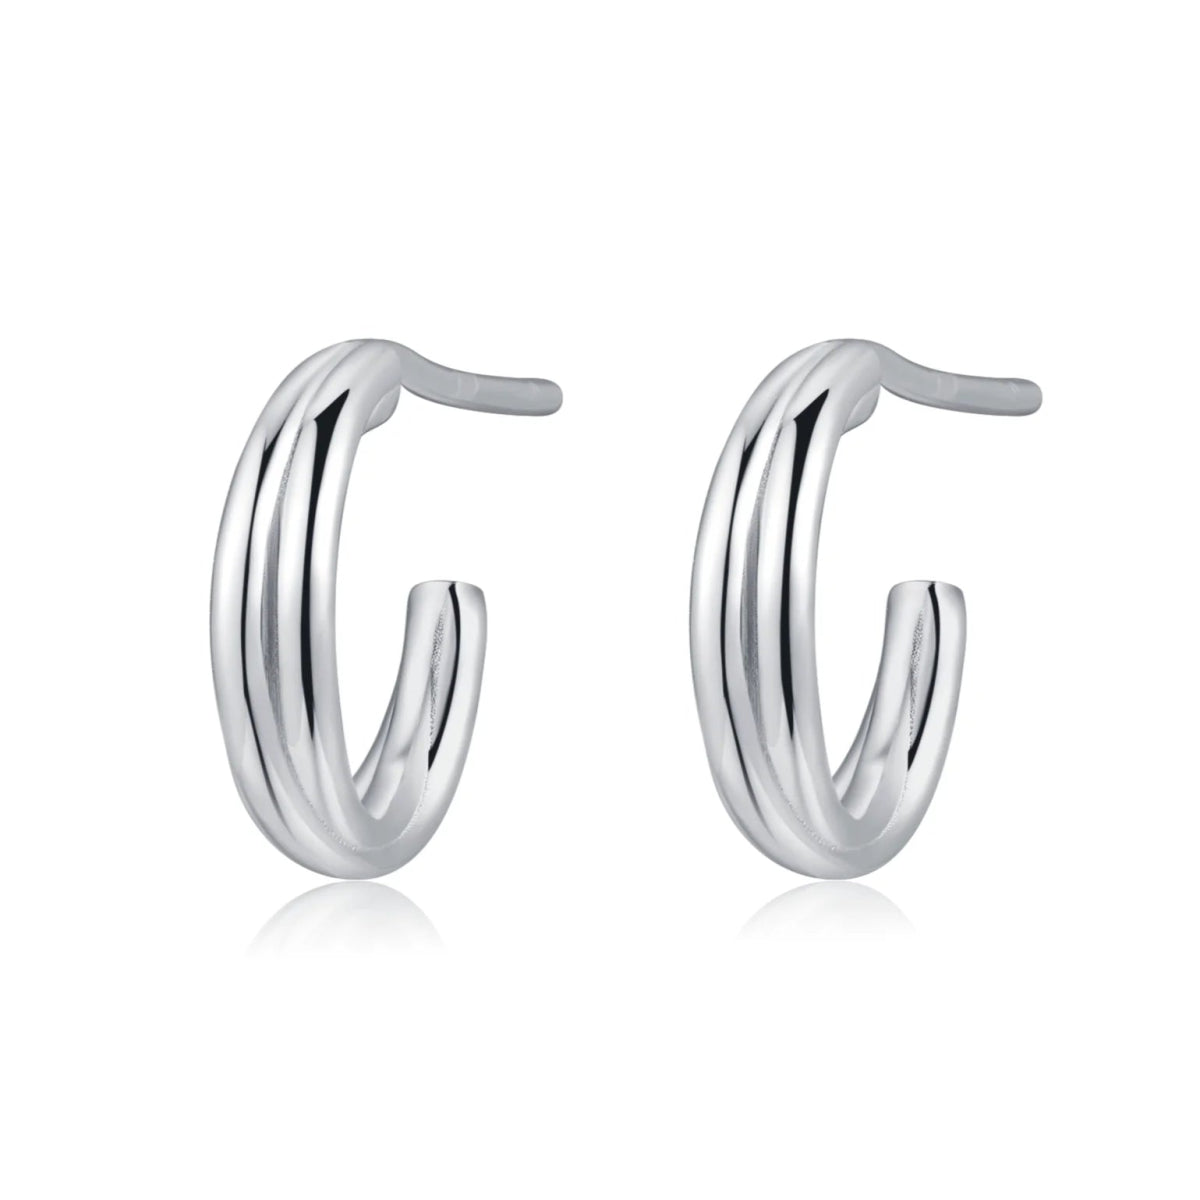 "Half Ring Joins" Earrings - Milas Jewels Shop